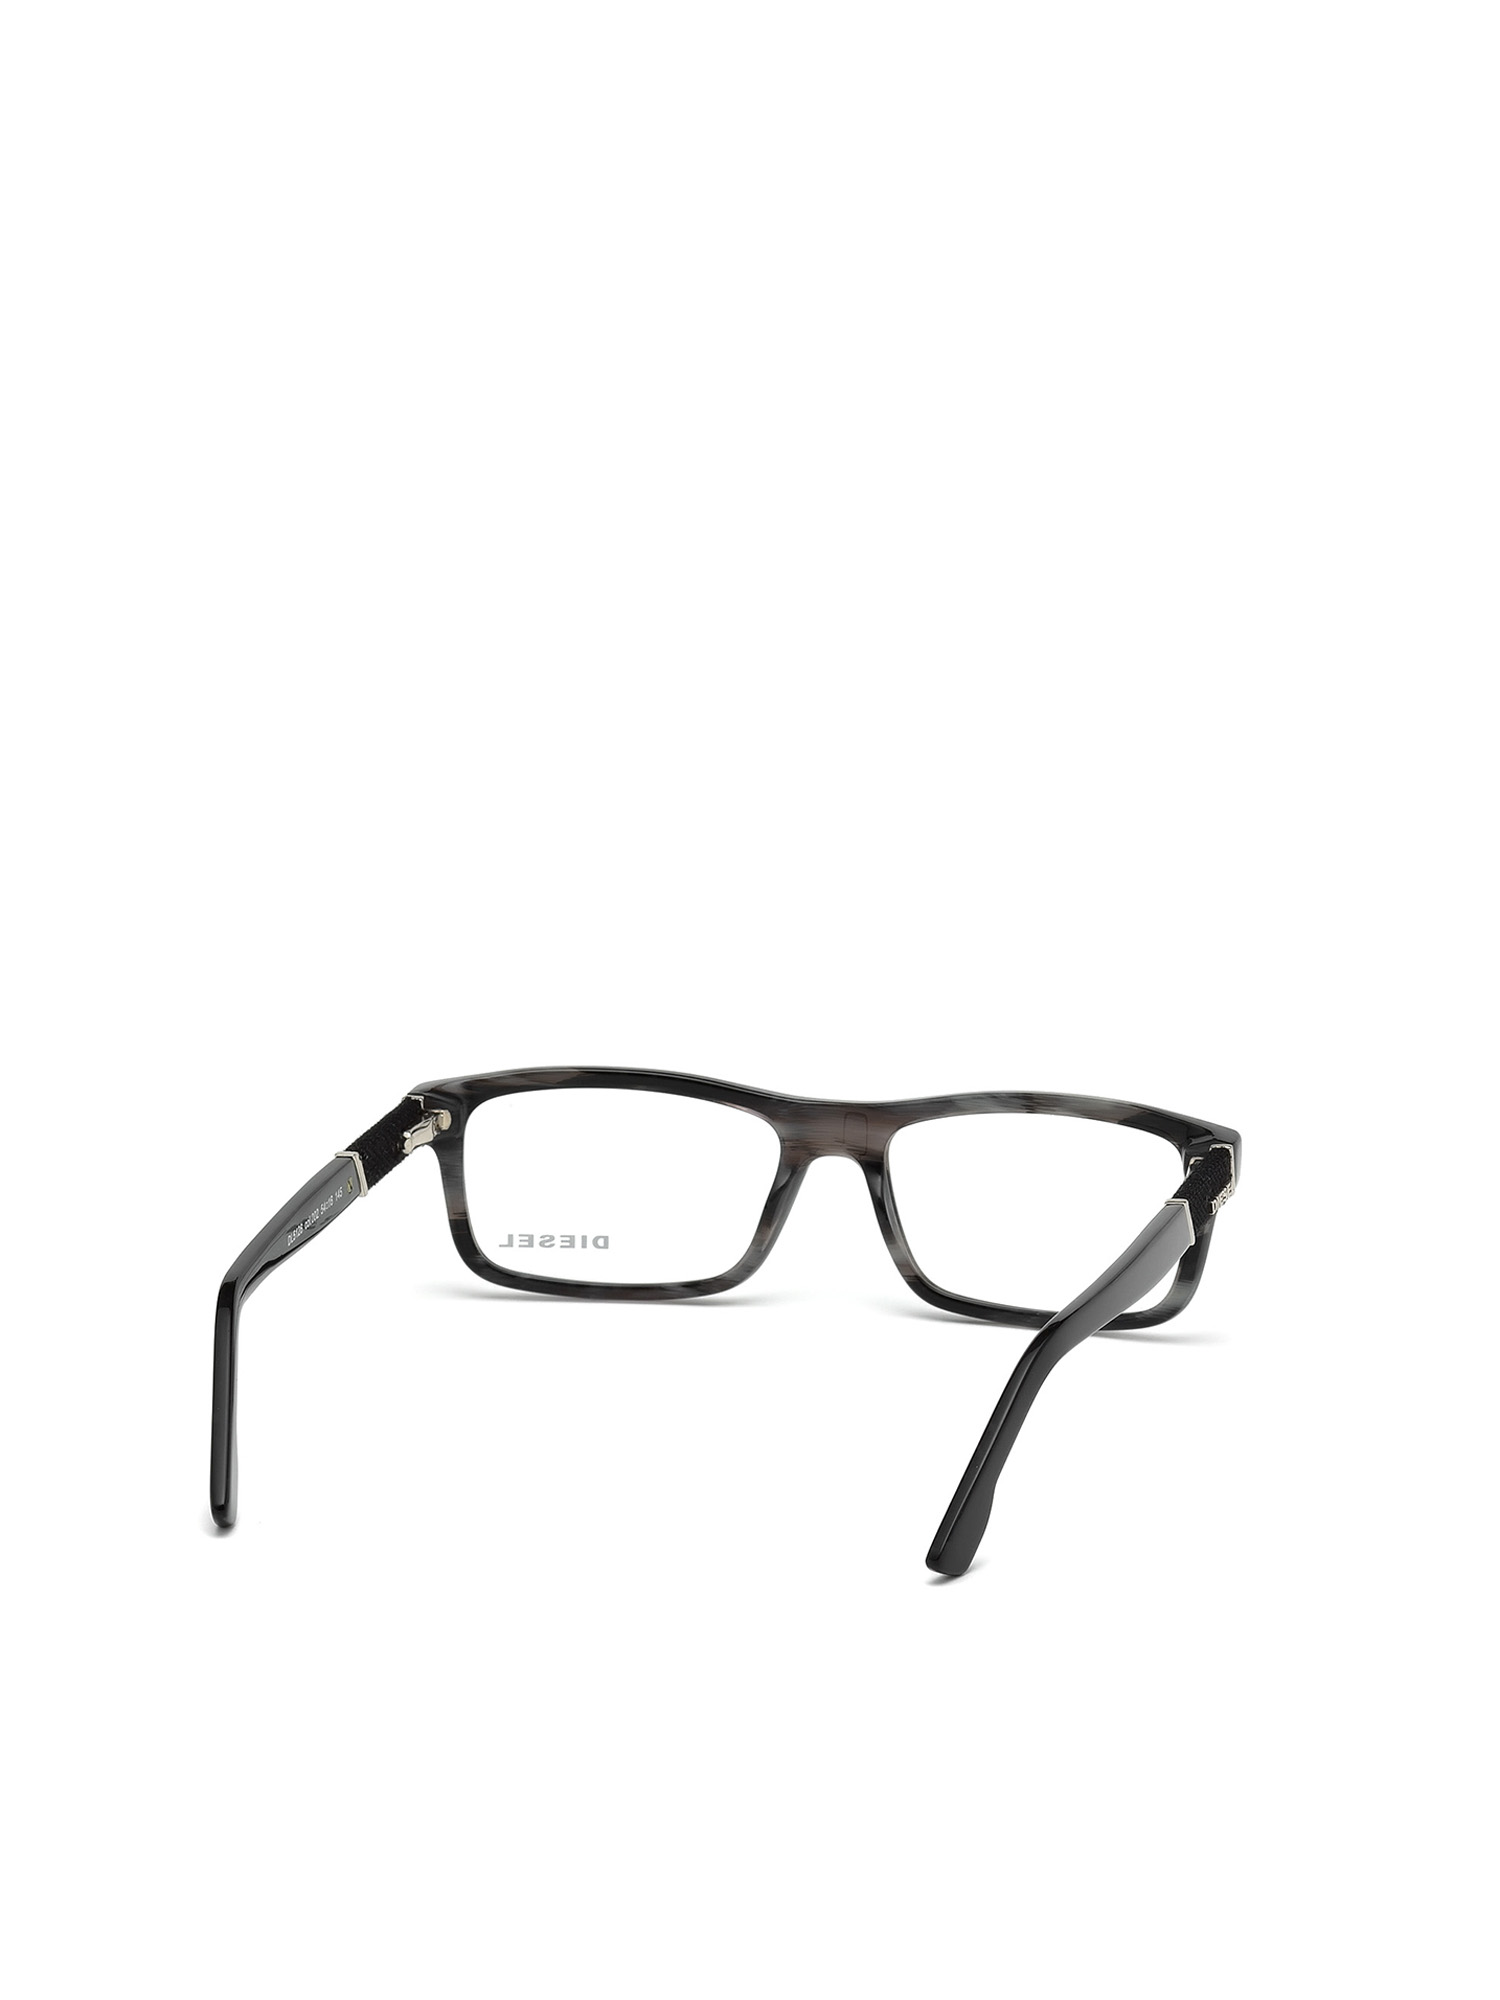 0,25 tot Diesel leesbril van Accessoires Zonnebrillen & Eyewear Leesbrillen 3,50 frame donkerblauw camouflage 55mm dl5167 092 